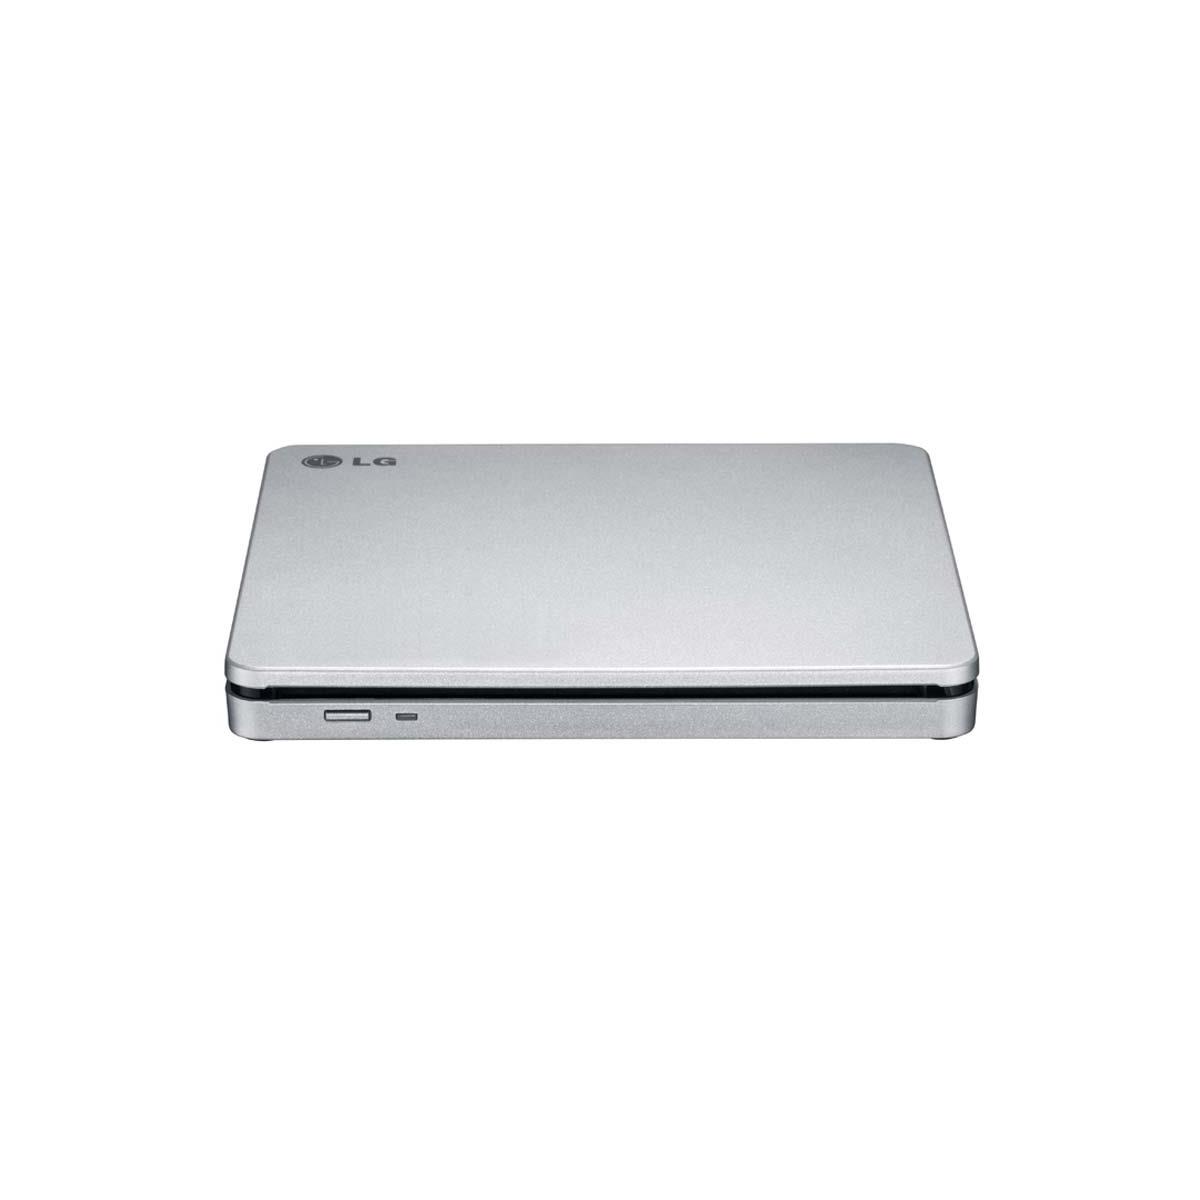 Image of LG Electronics External Slim DVD-RW 8x Slot-In USB Cyberlink Optical Drive